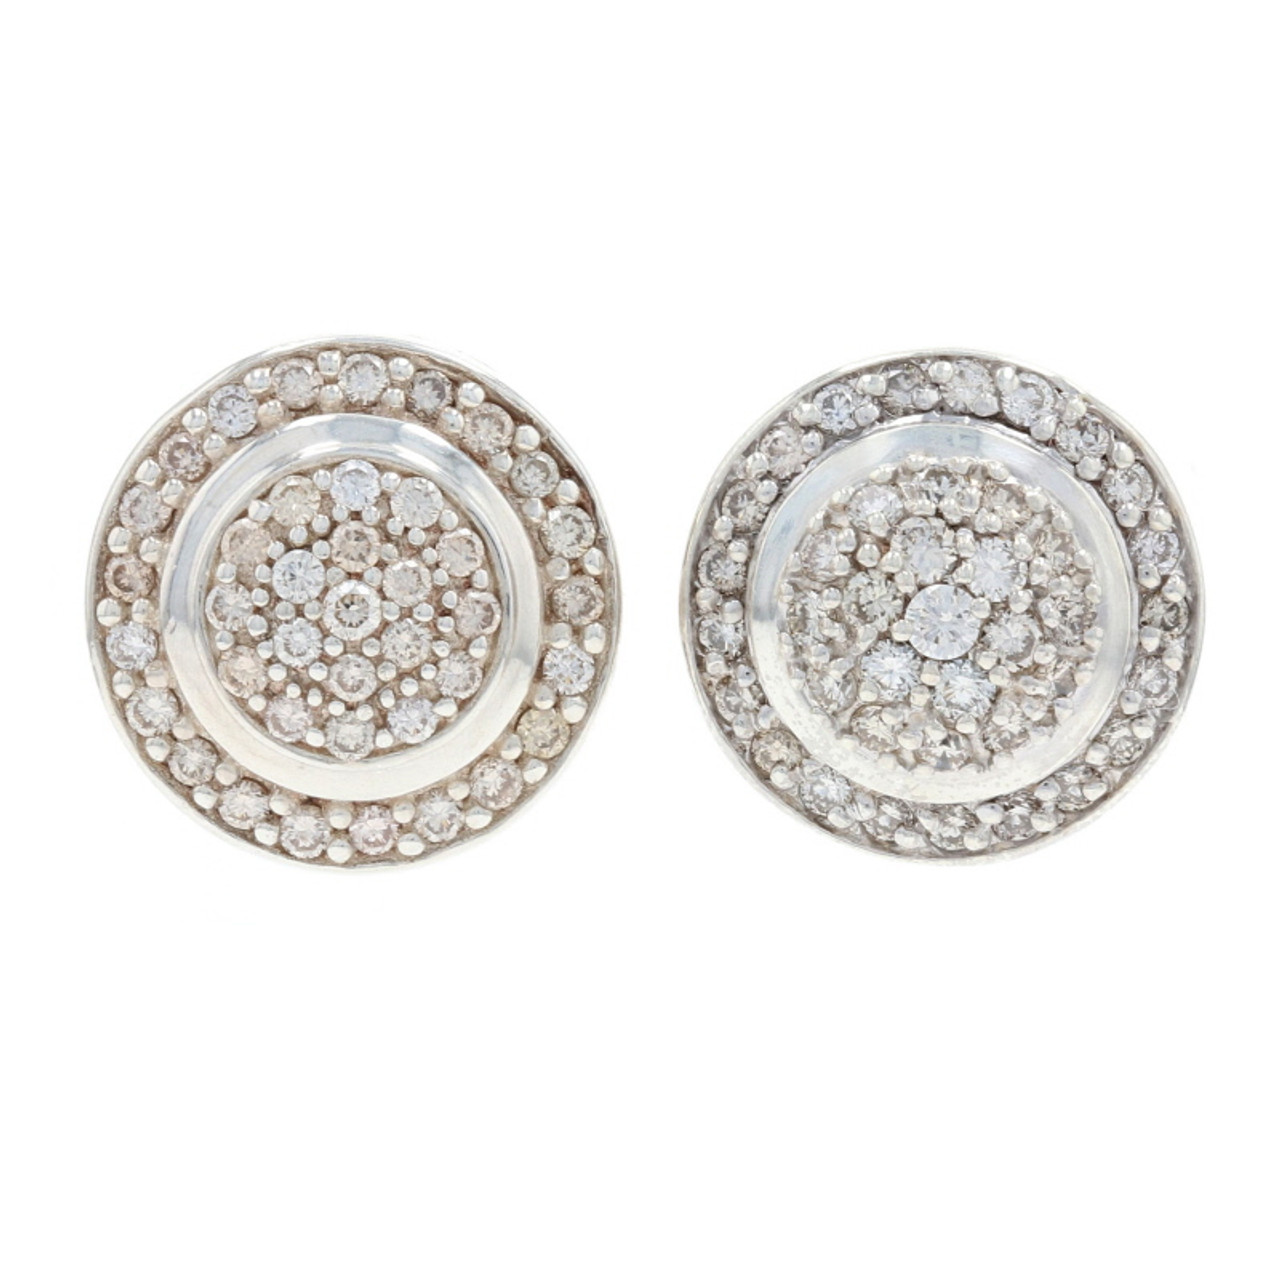 Buy Diamond Earrings Online in India | Stunning Designs